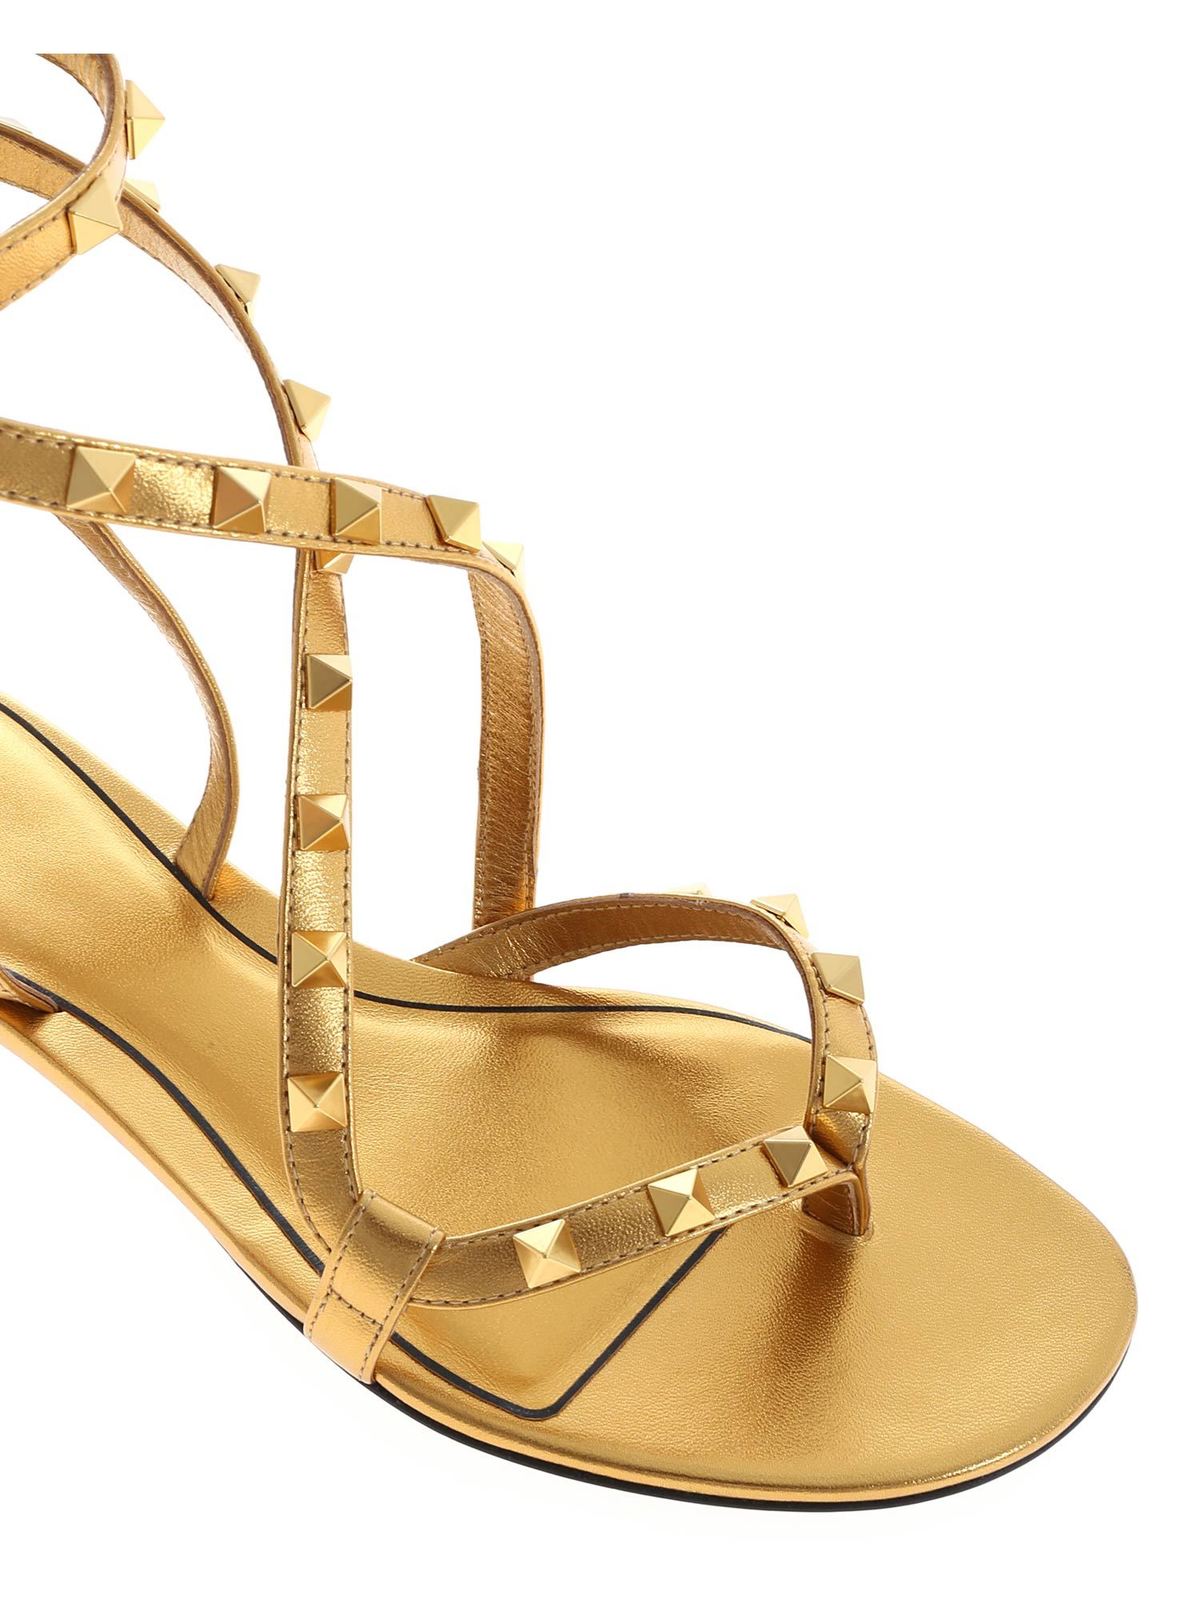 valentino rockstud gold sandals